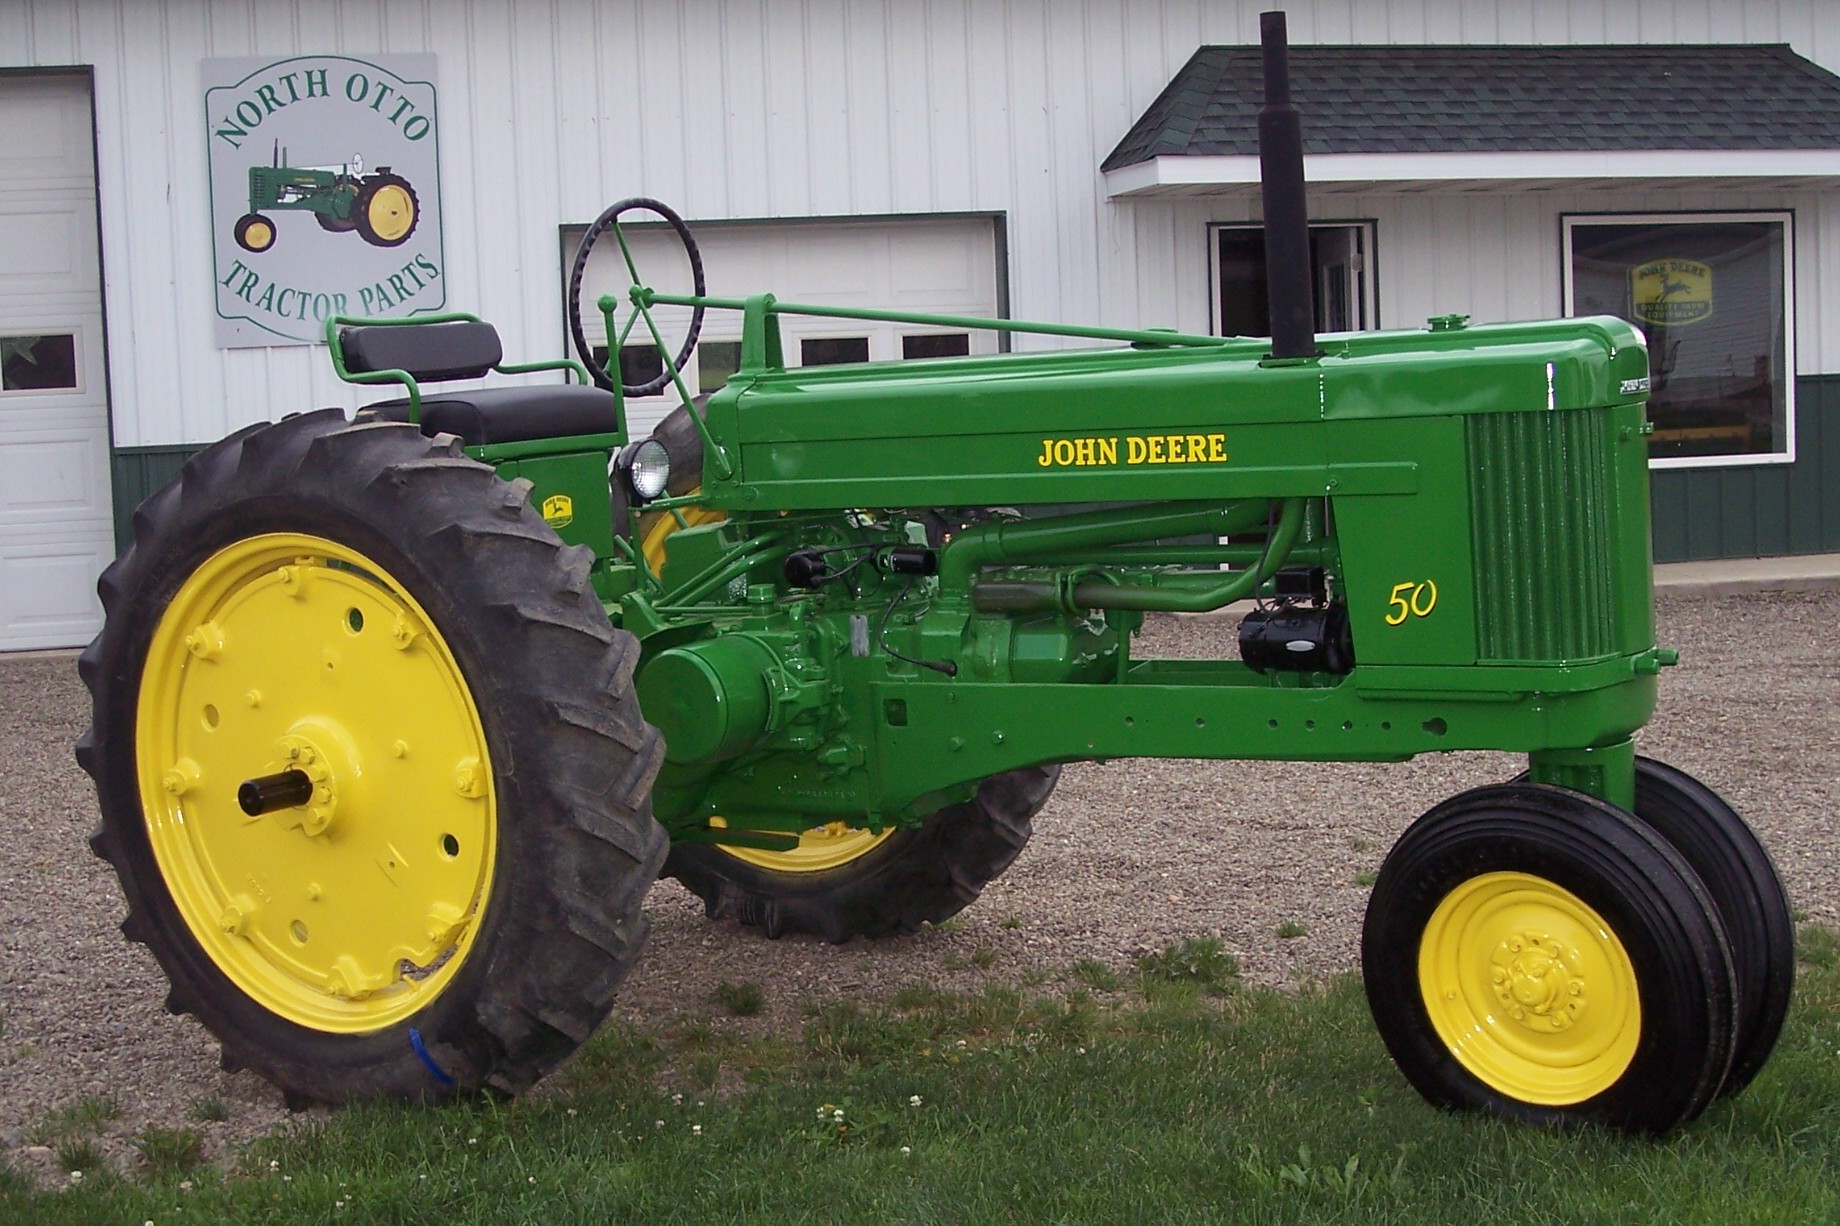 John Deere 50 | North Otto Tractor Parts